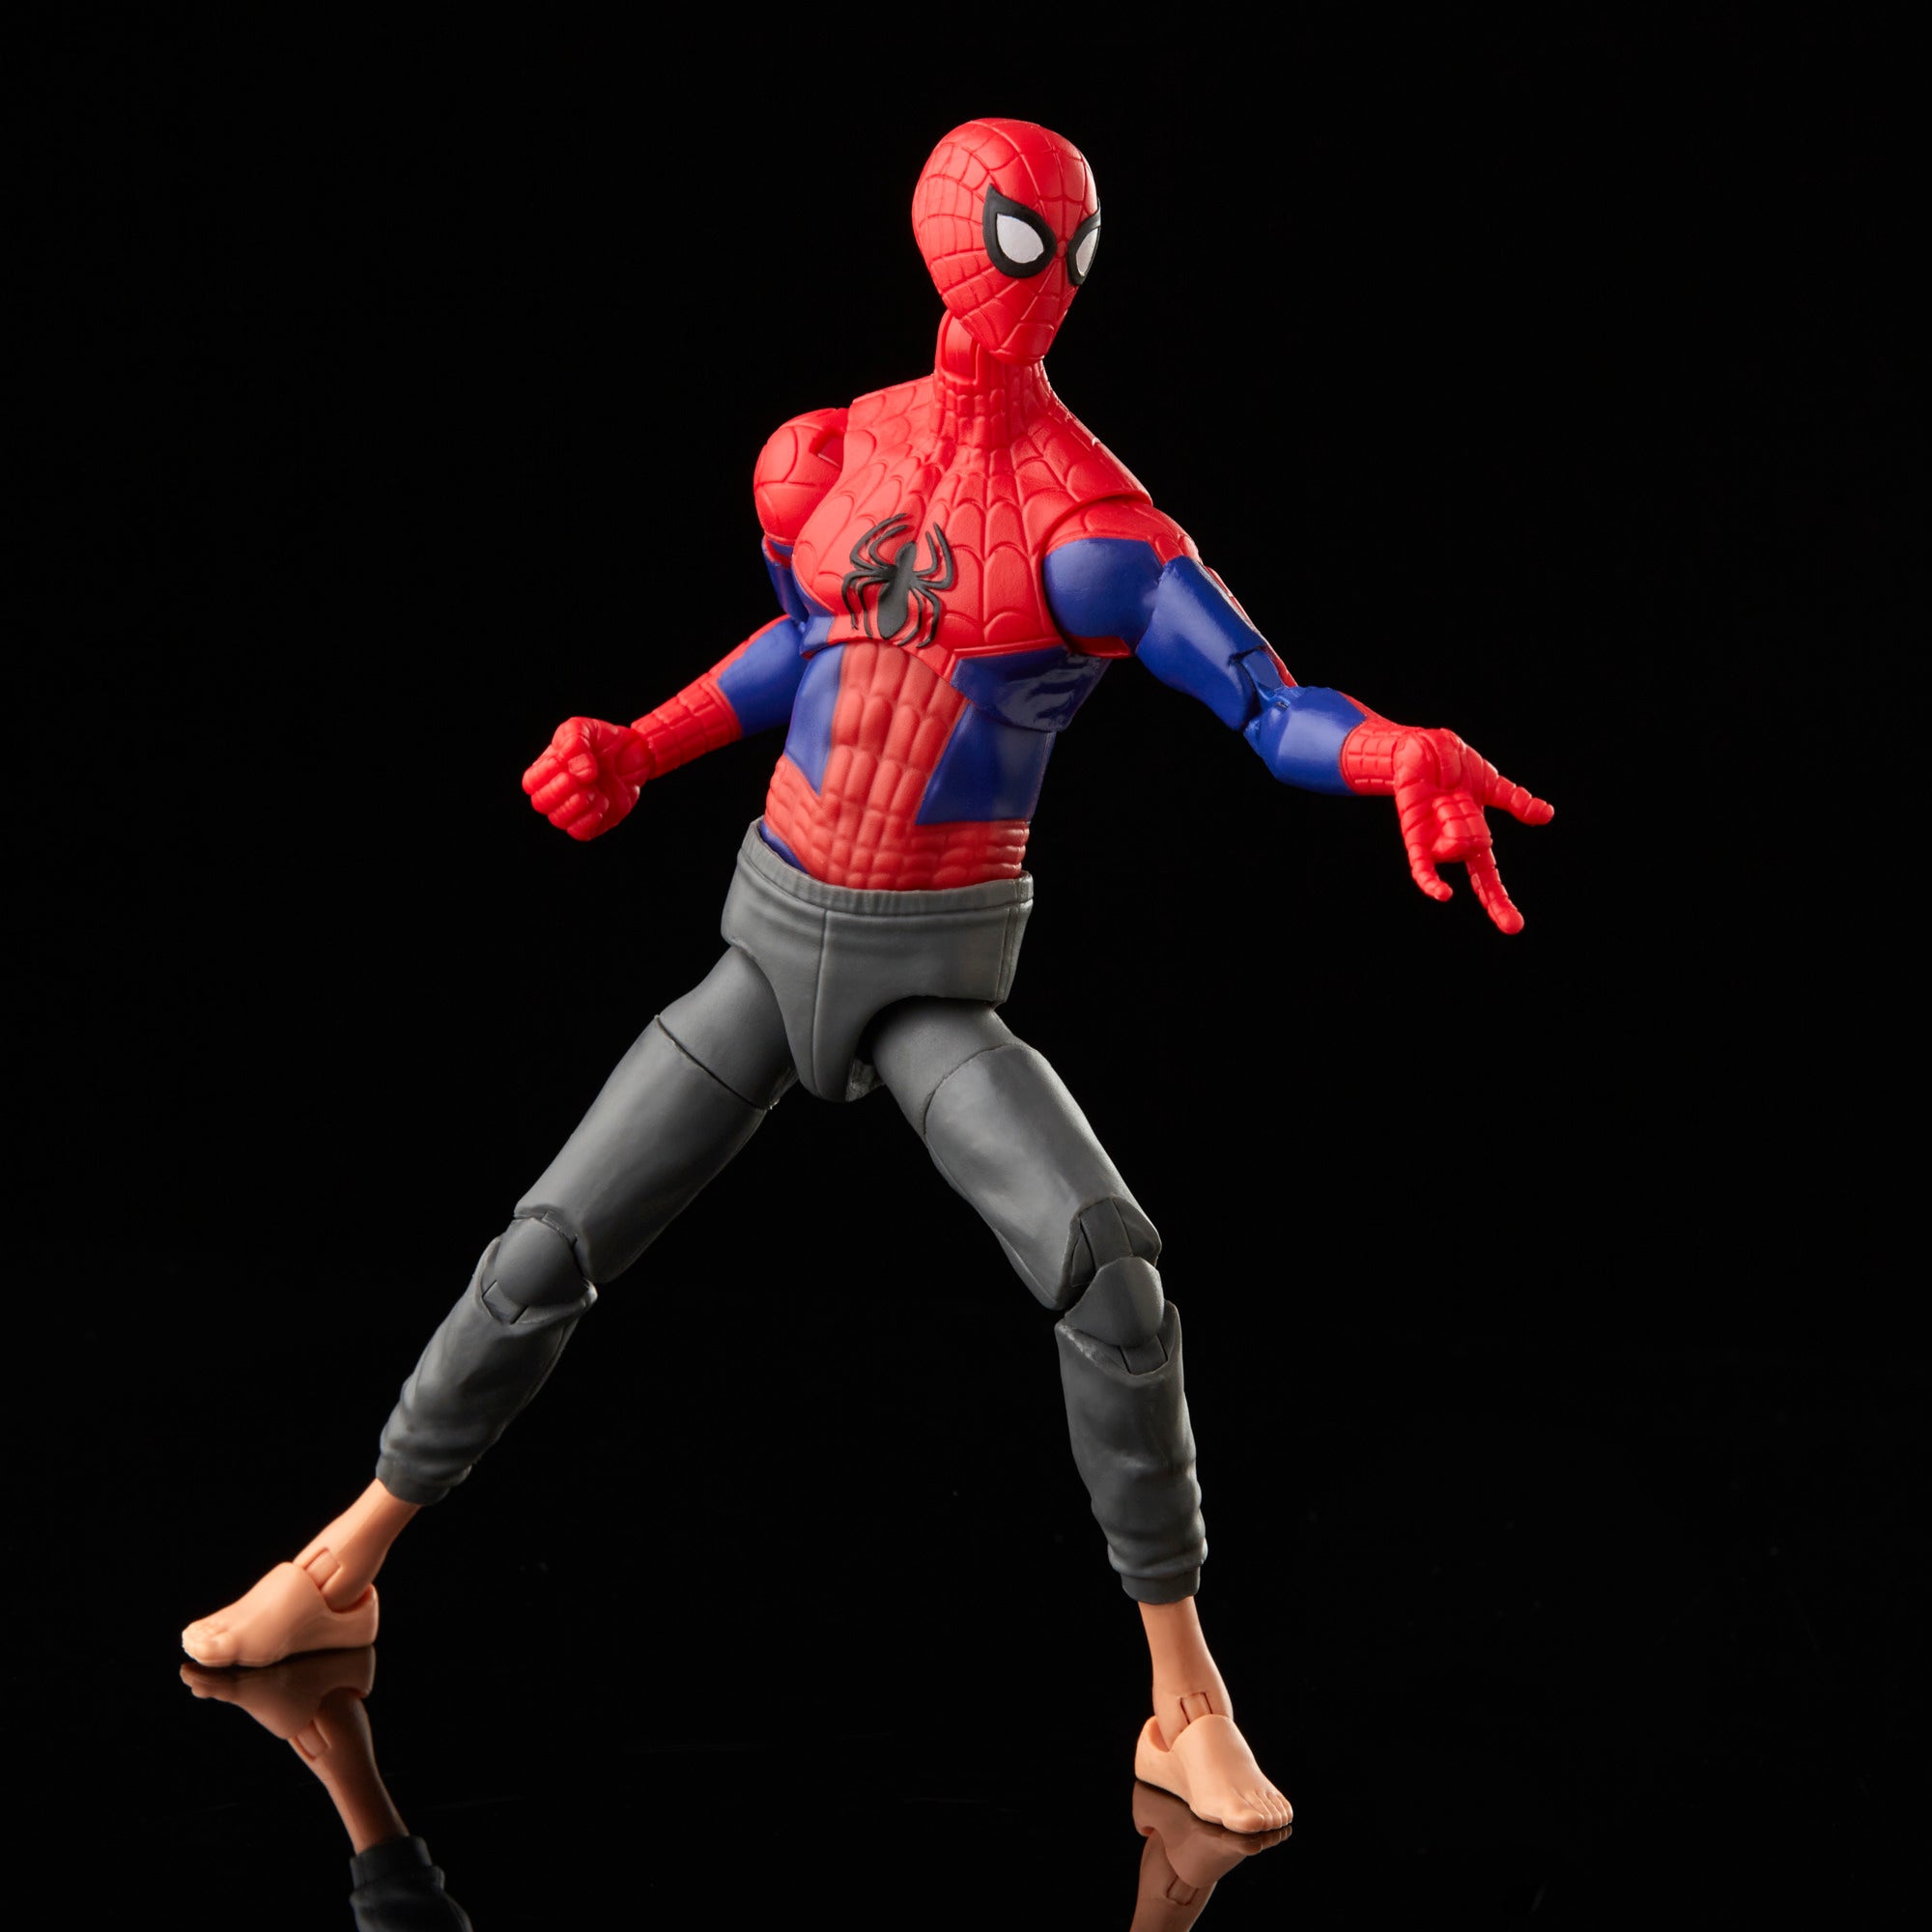 Figurine - Spiderman Legends V2 - Prestige 6 - MARVEL